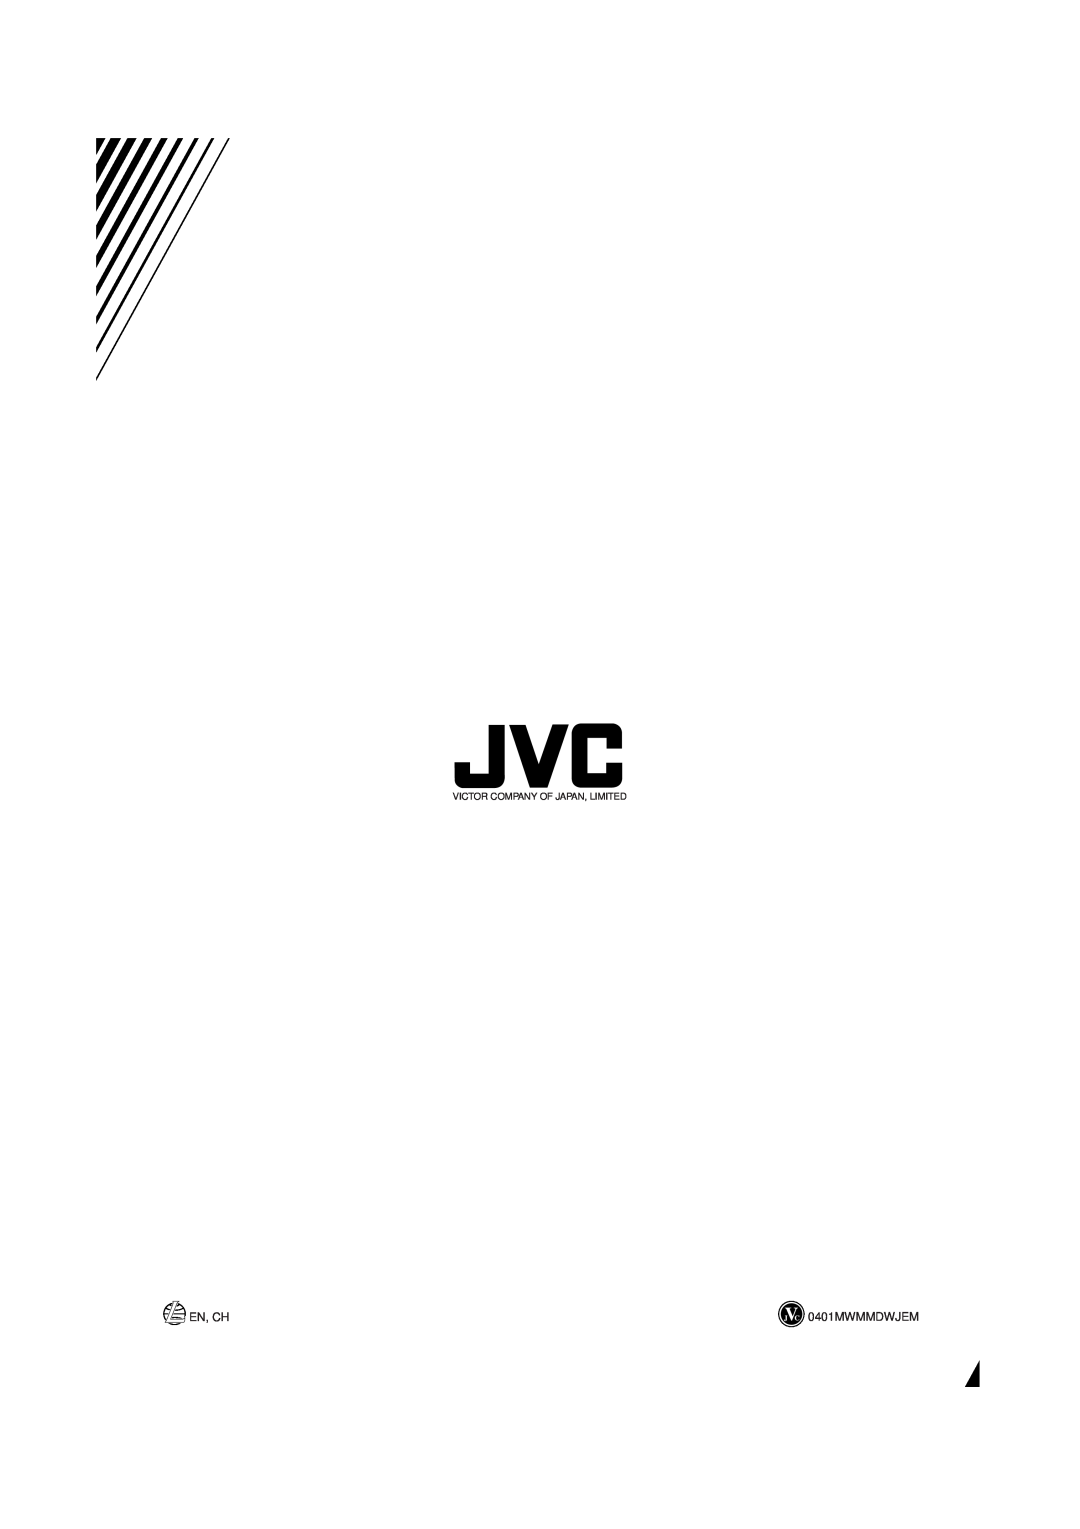 JVC UX-P3 manual En, Ch, 0401MWMMDWJEM, Victor Company Of Japan, Limited 